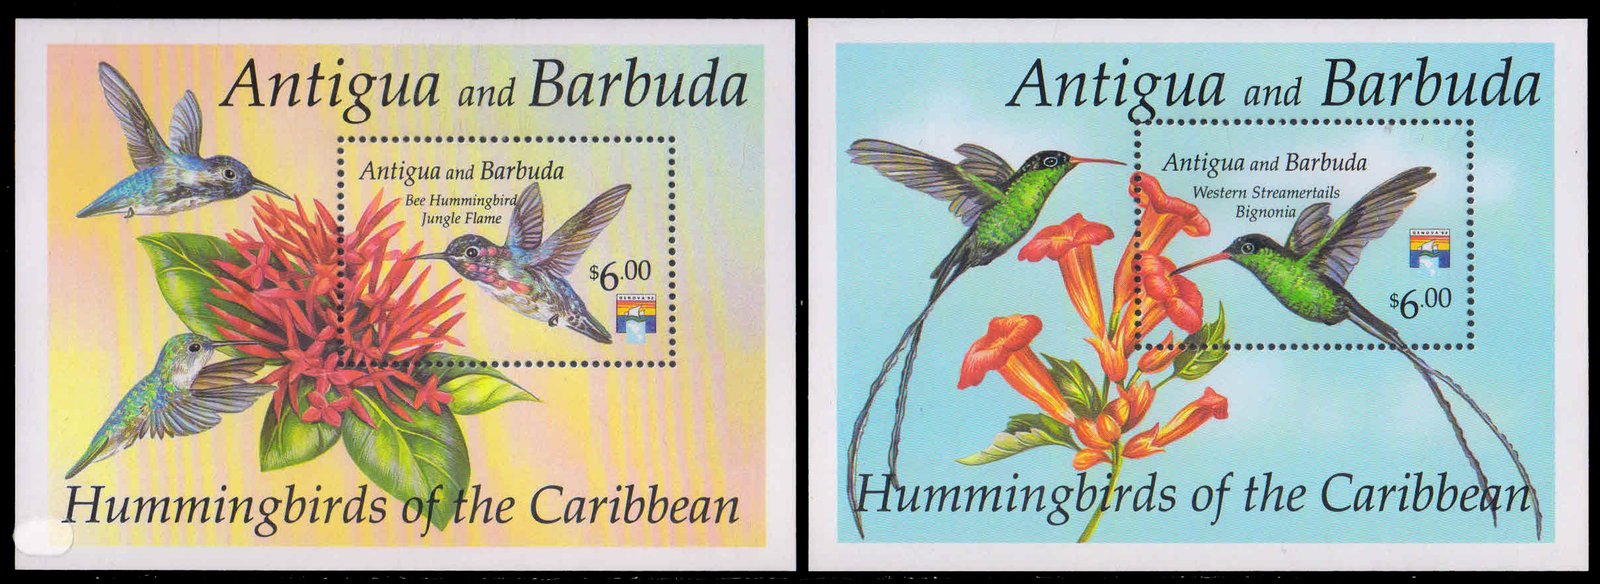 ANTIGUA & BARBUDA 1992-Flora & Fauna, Birds, Set of 2 Miniature Sheets, MNH, Set of 2 Sheets, Cat � 10-